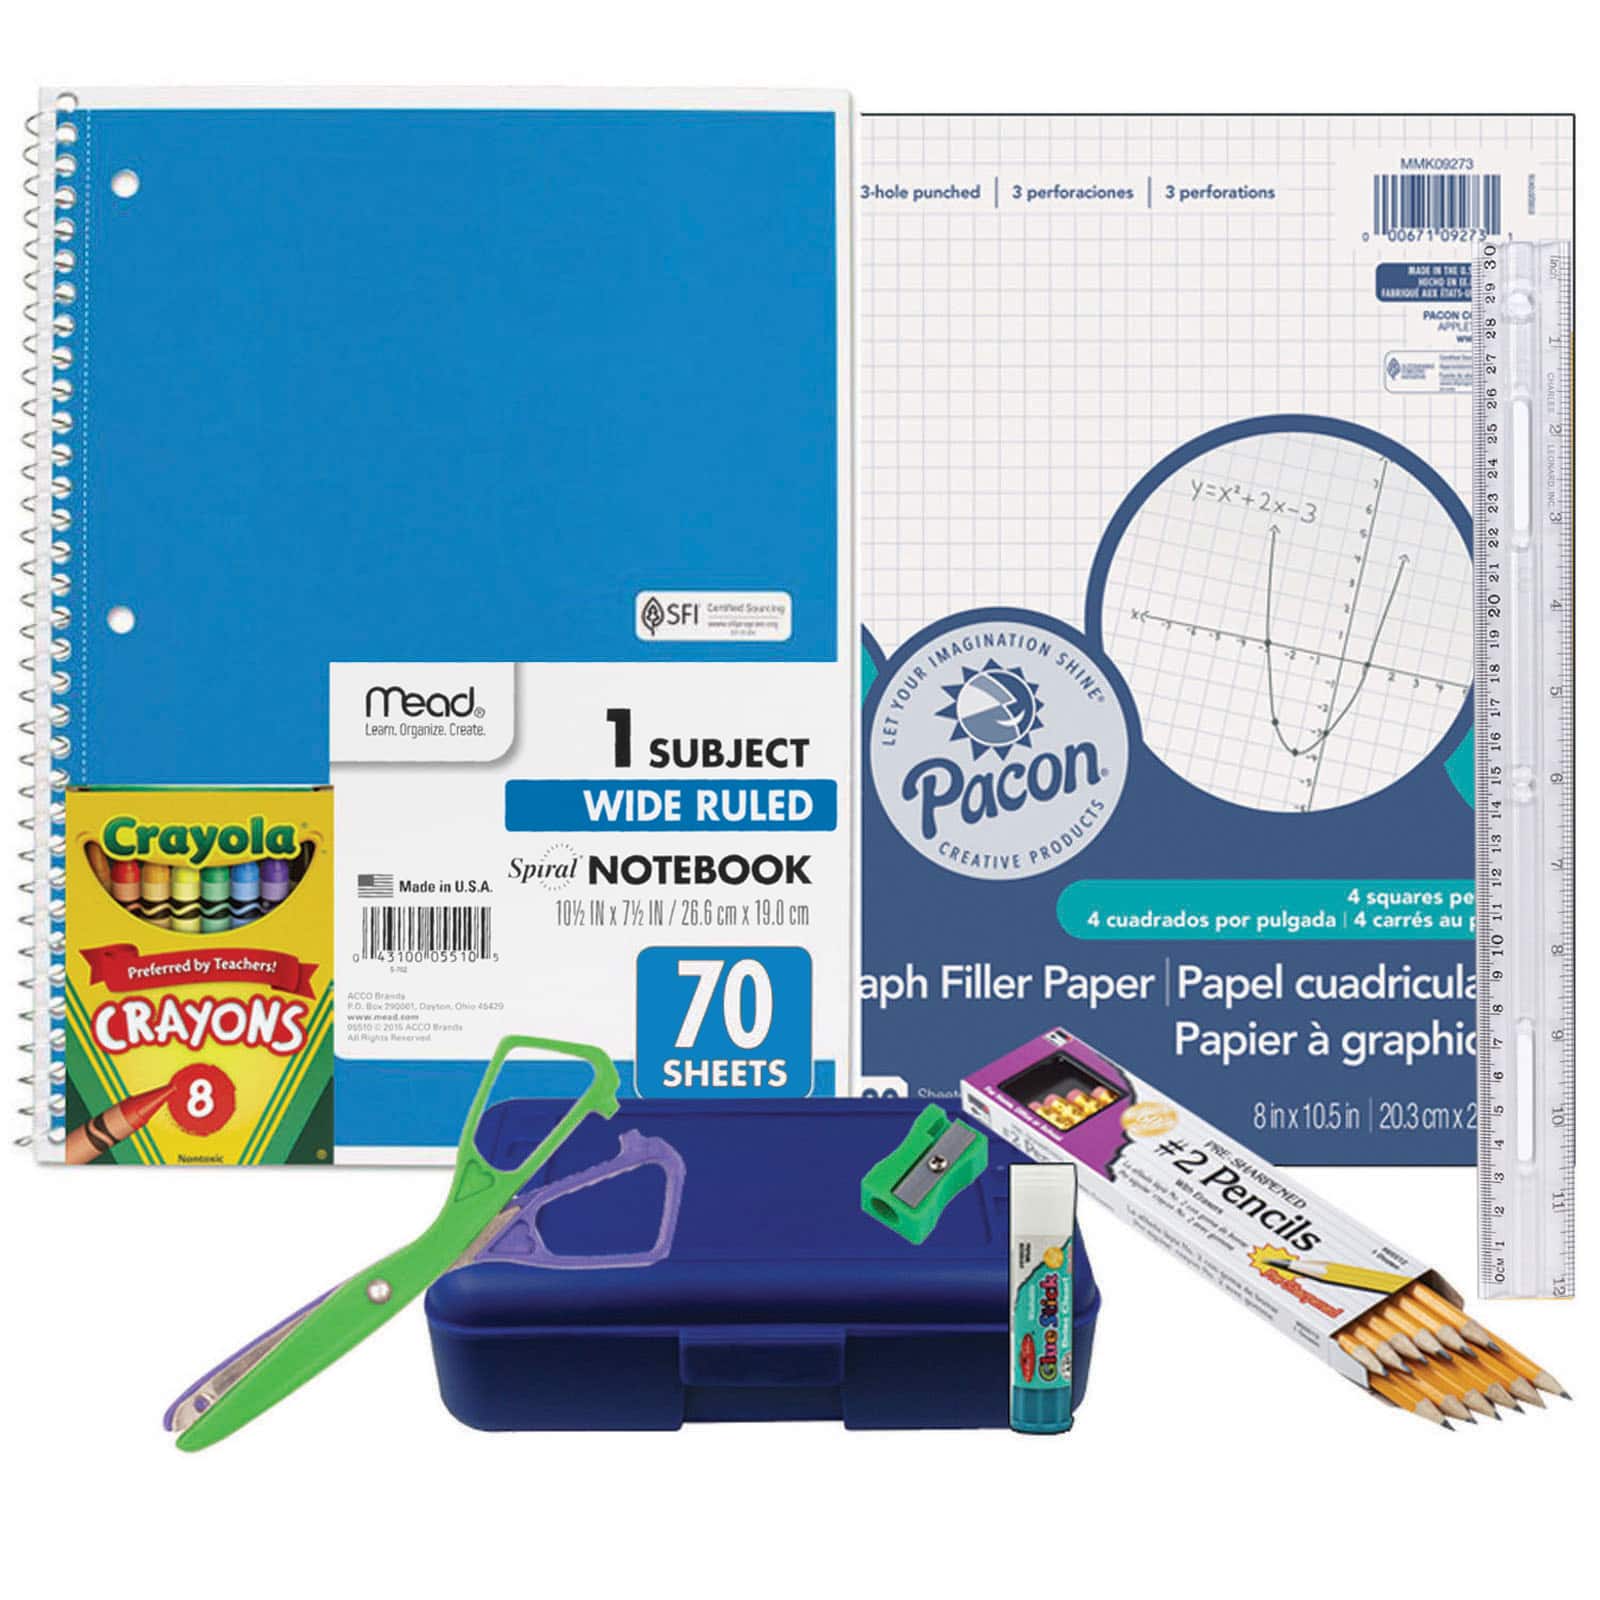 Multi-Brand Basic Elementary School Supply Kit